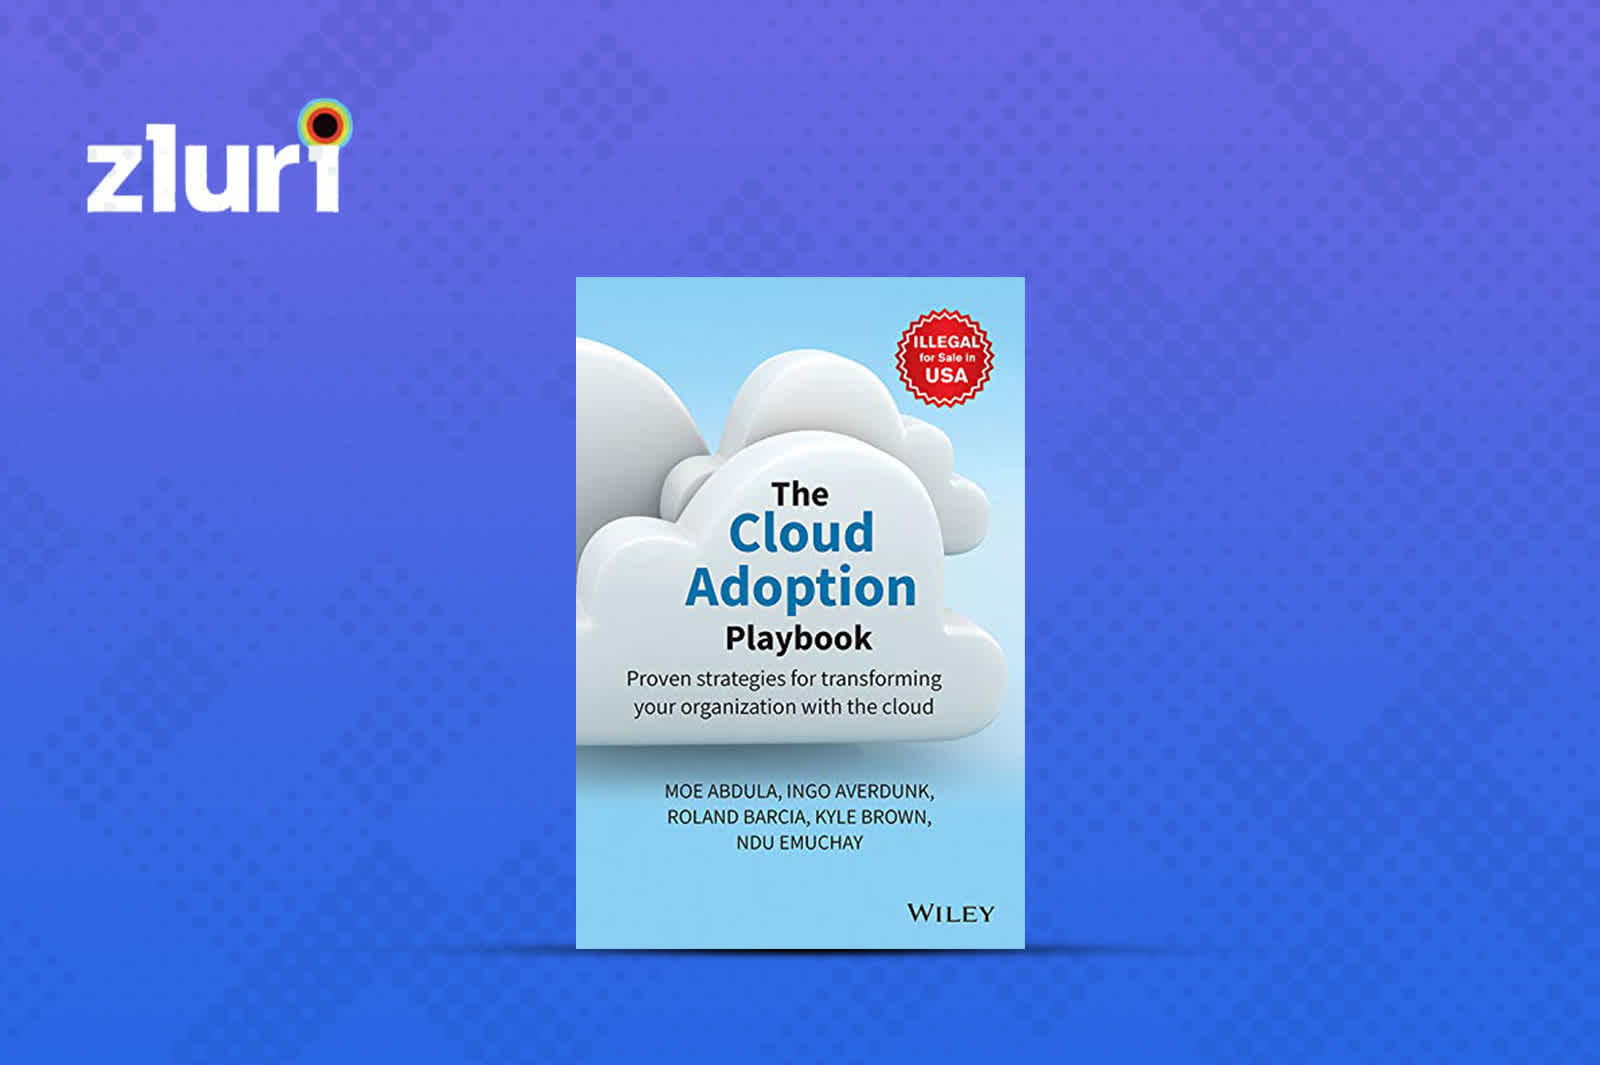  The Cloud Adoption Playbook